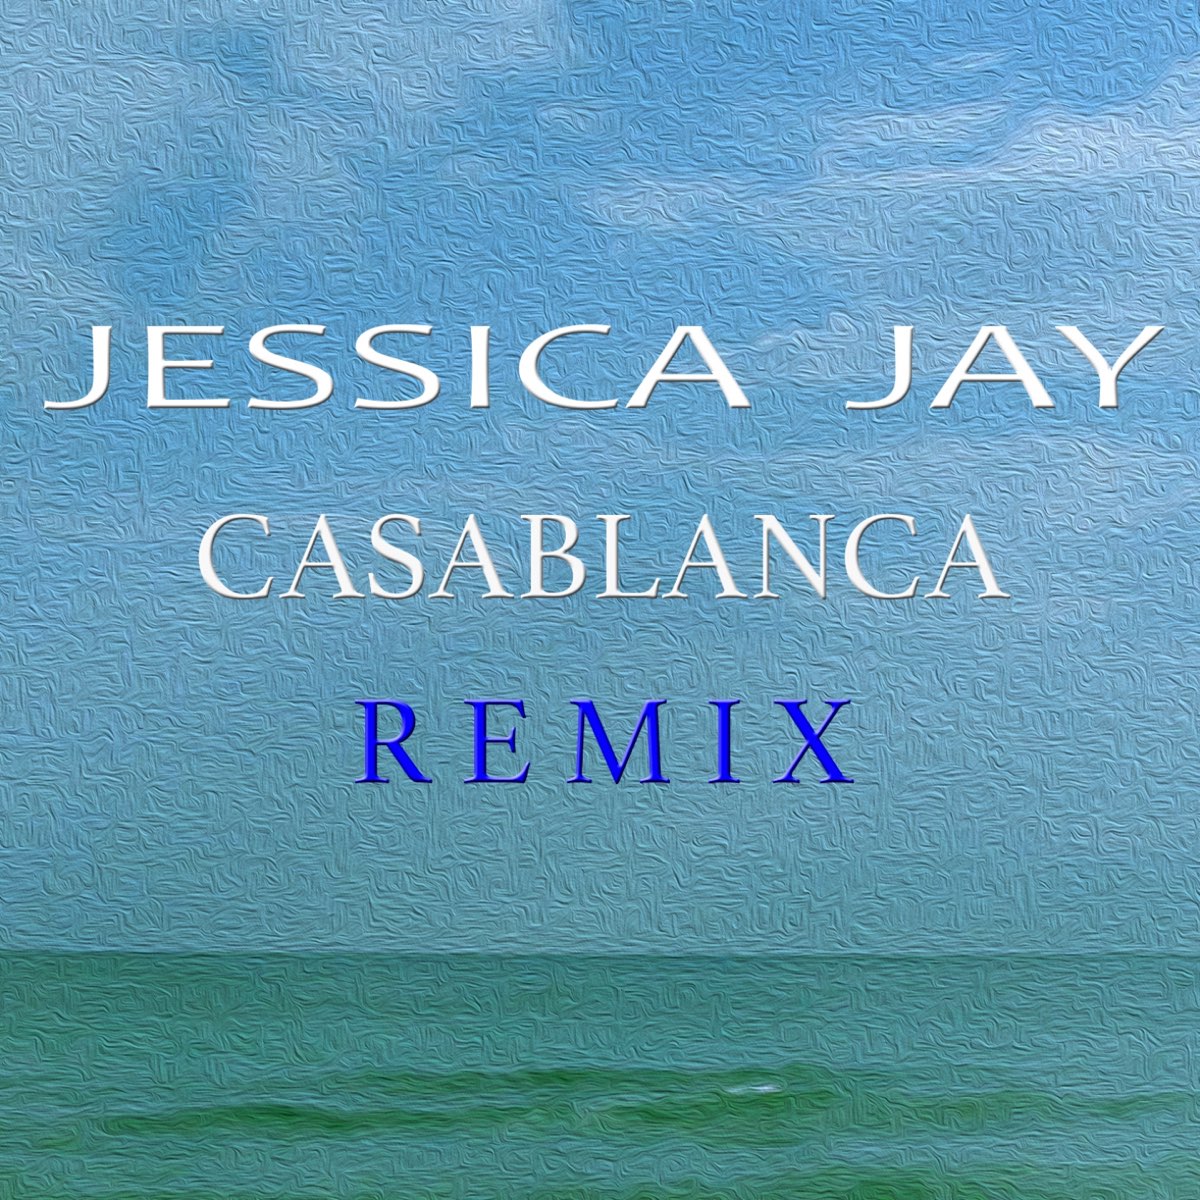 Jessica Jay Casablanca